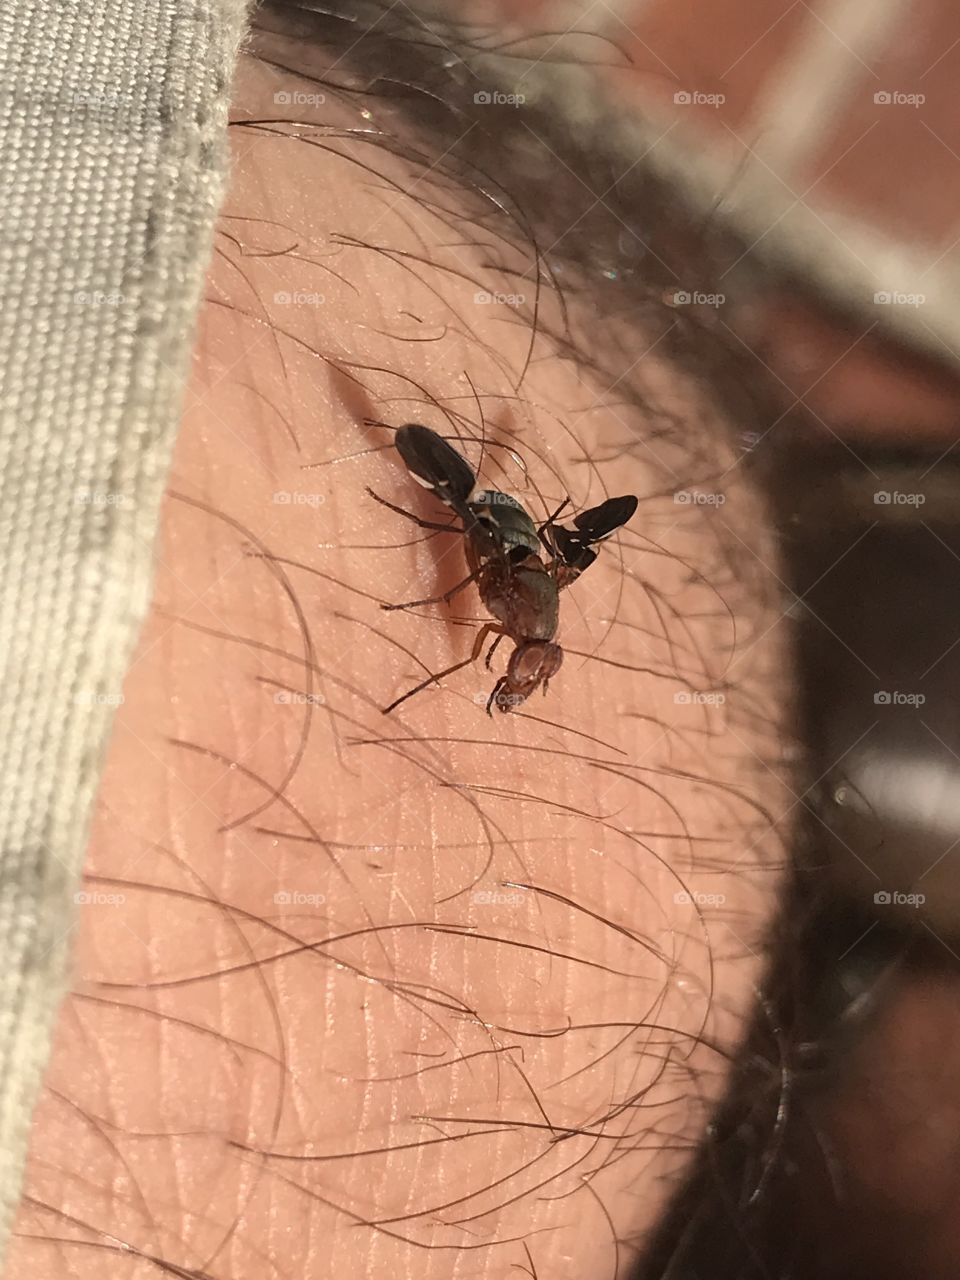 Bugs life- hanging on my leg